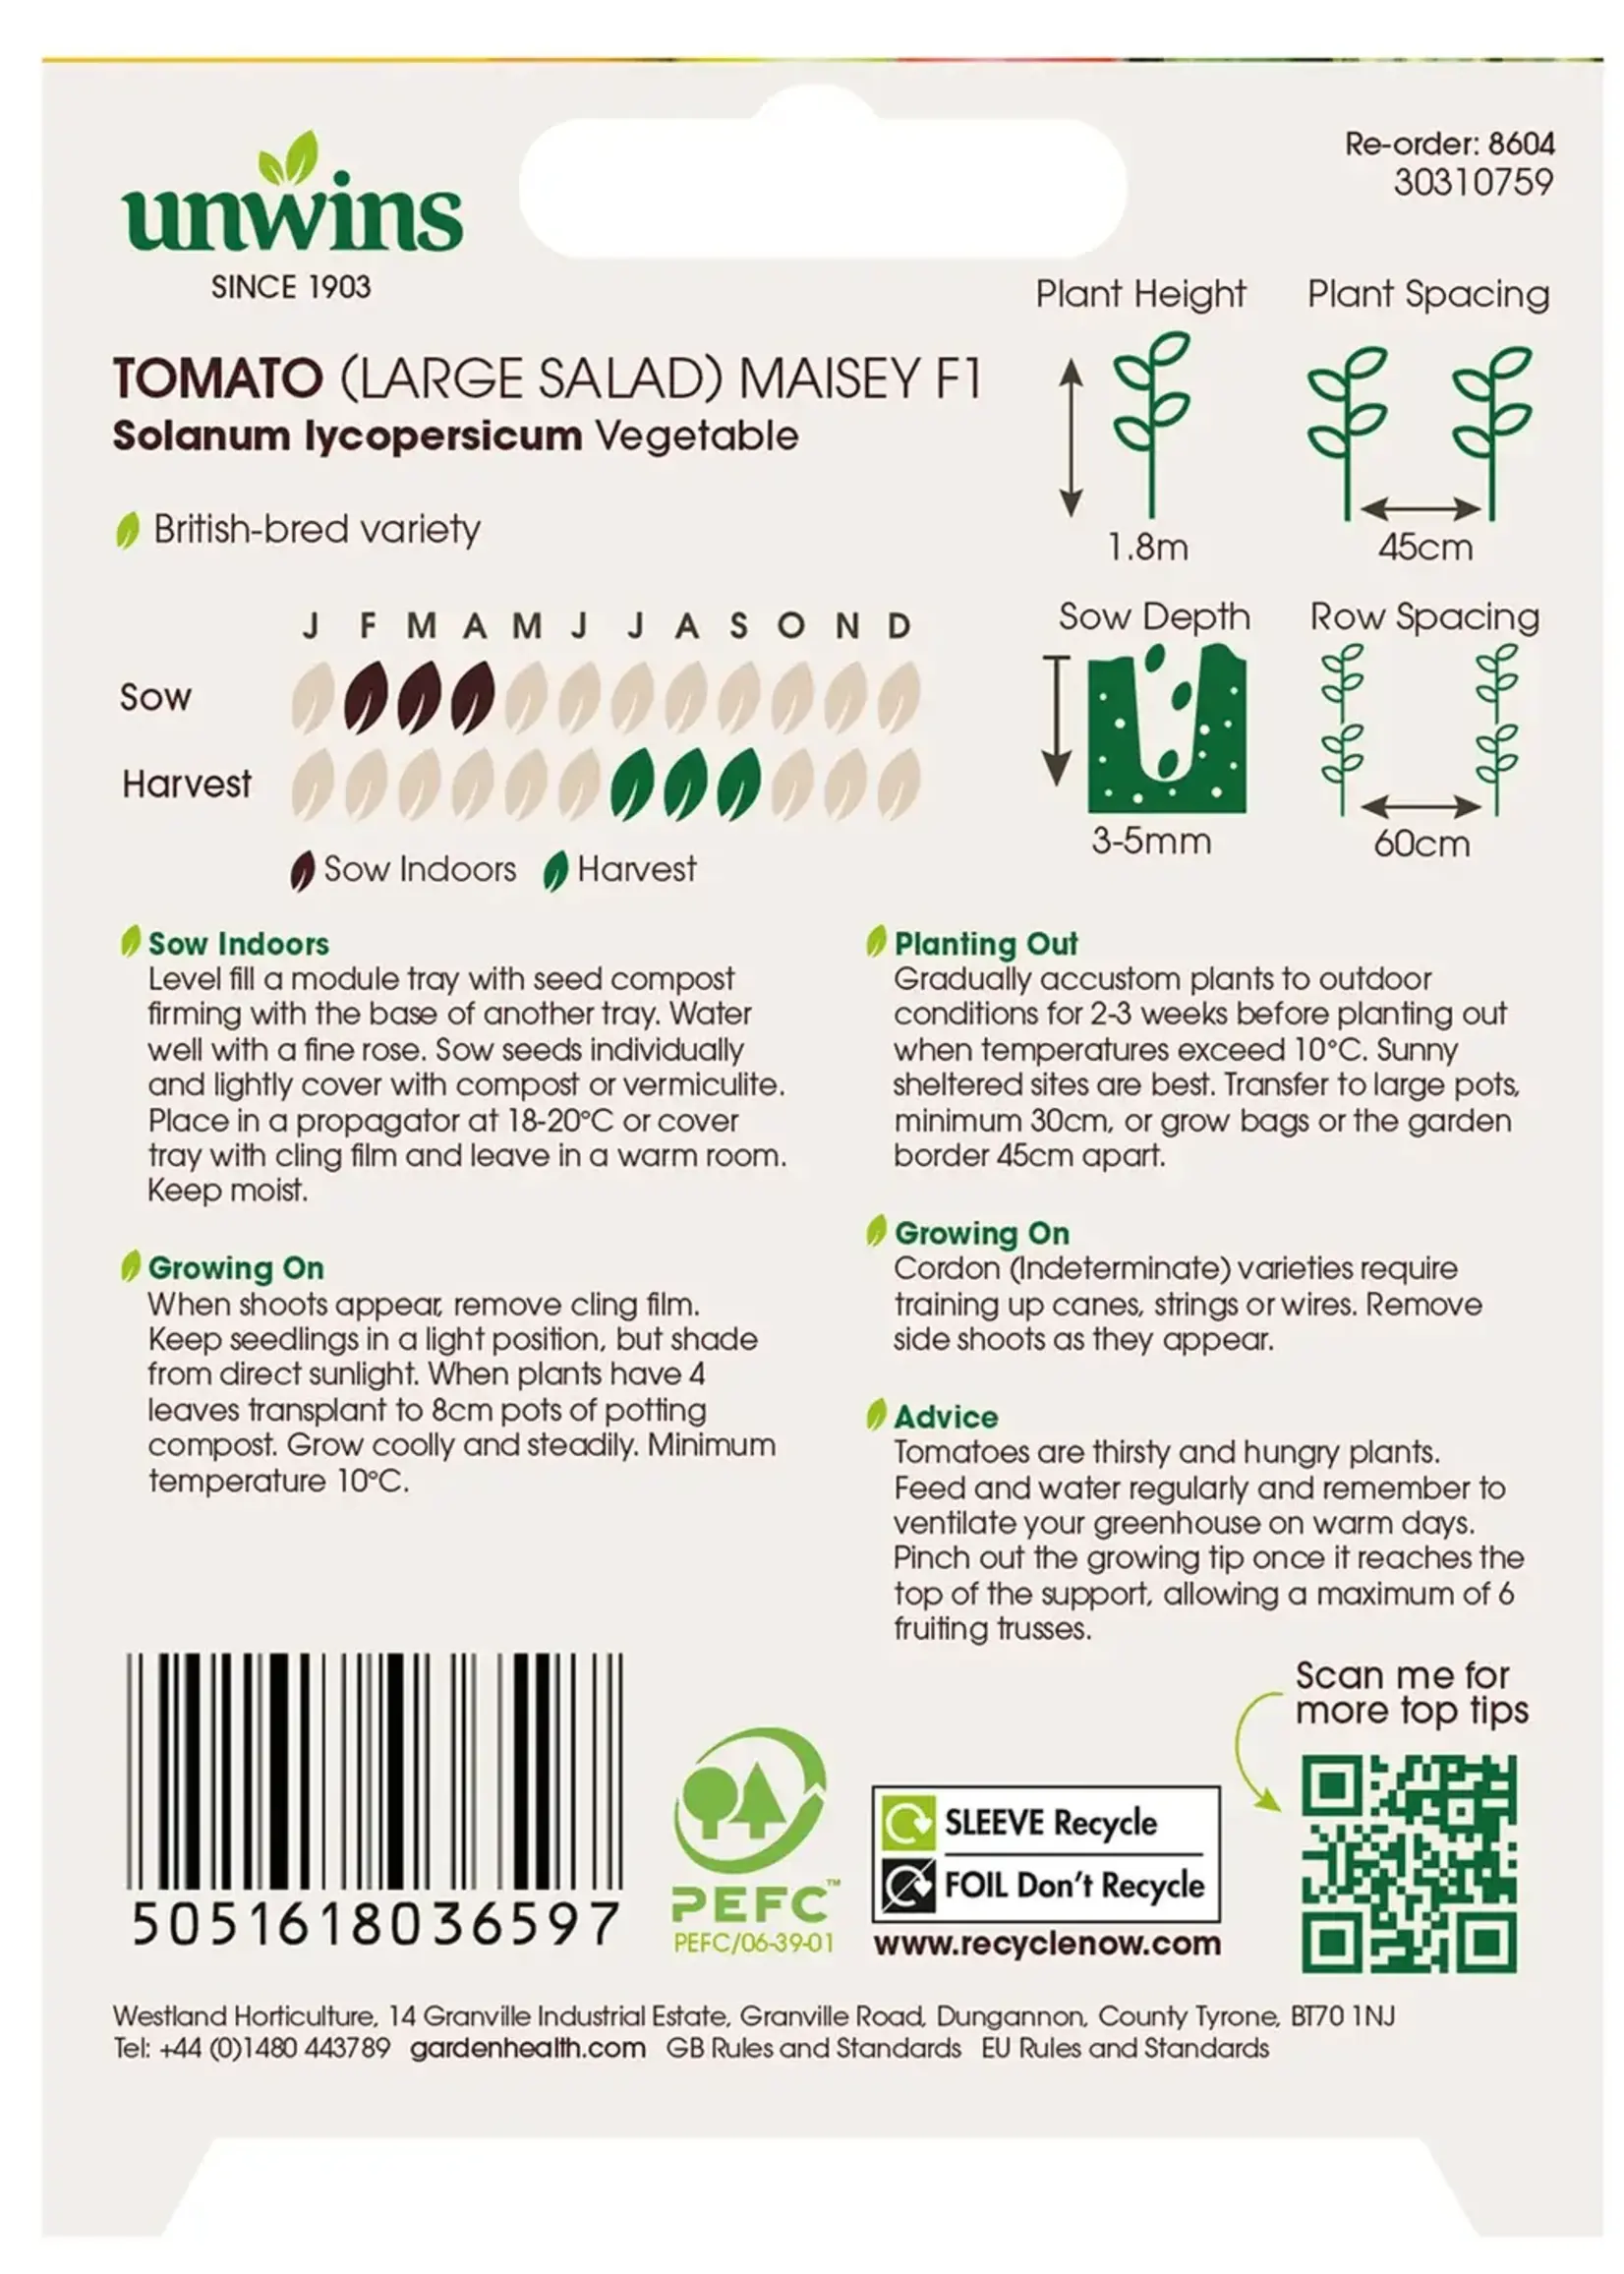 Unwins Tomato - Large Salad Maisey F1